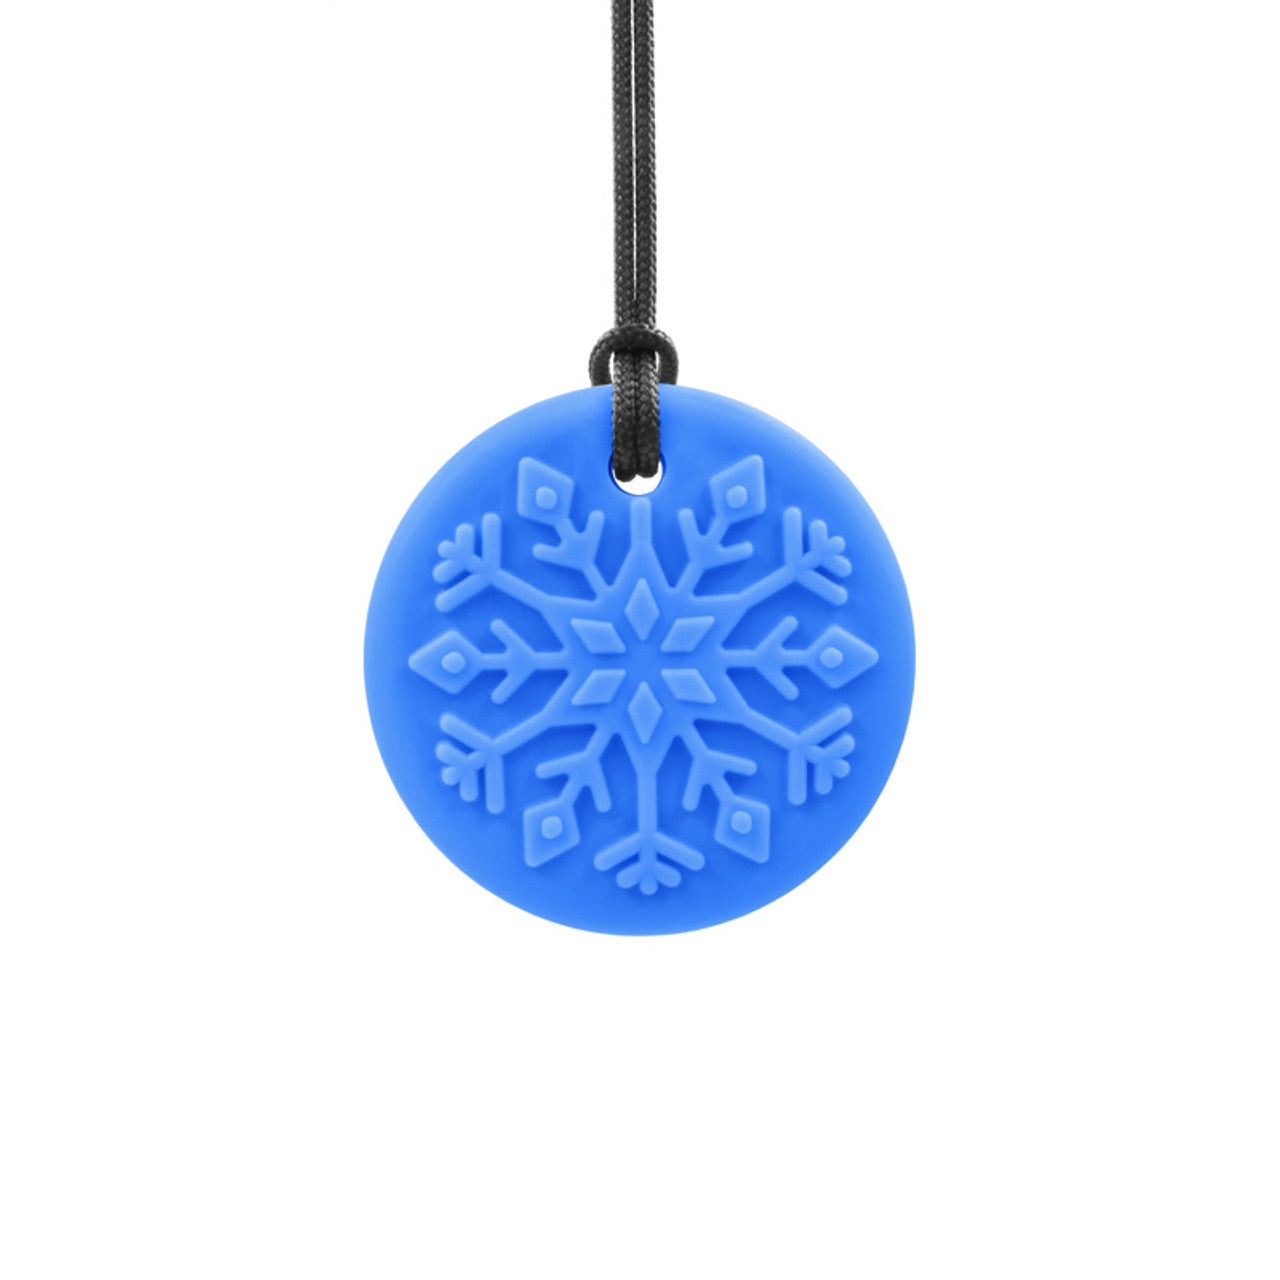 ARK_s_Blizzard_Bite_Chewable_Snowflake_Pendant_Jewelry_Royal_blue